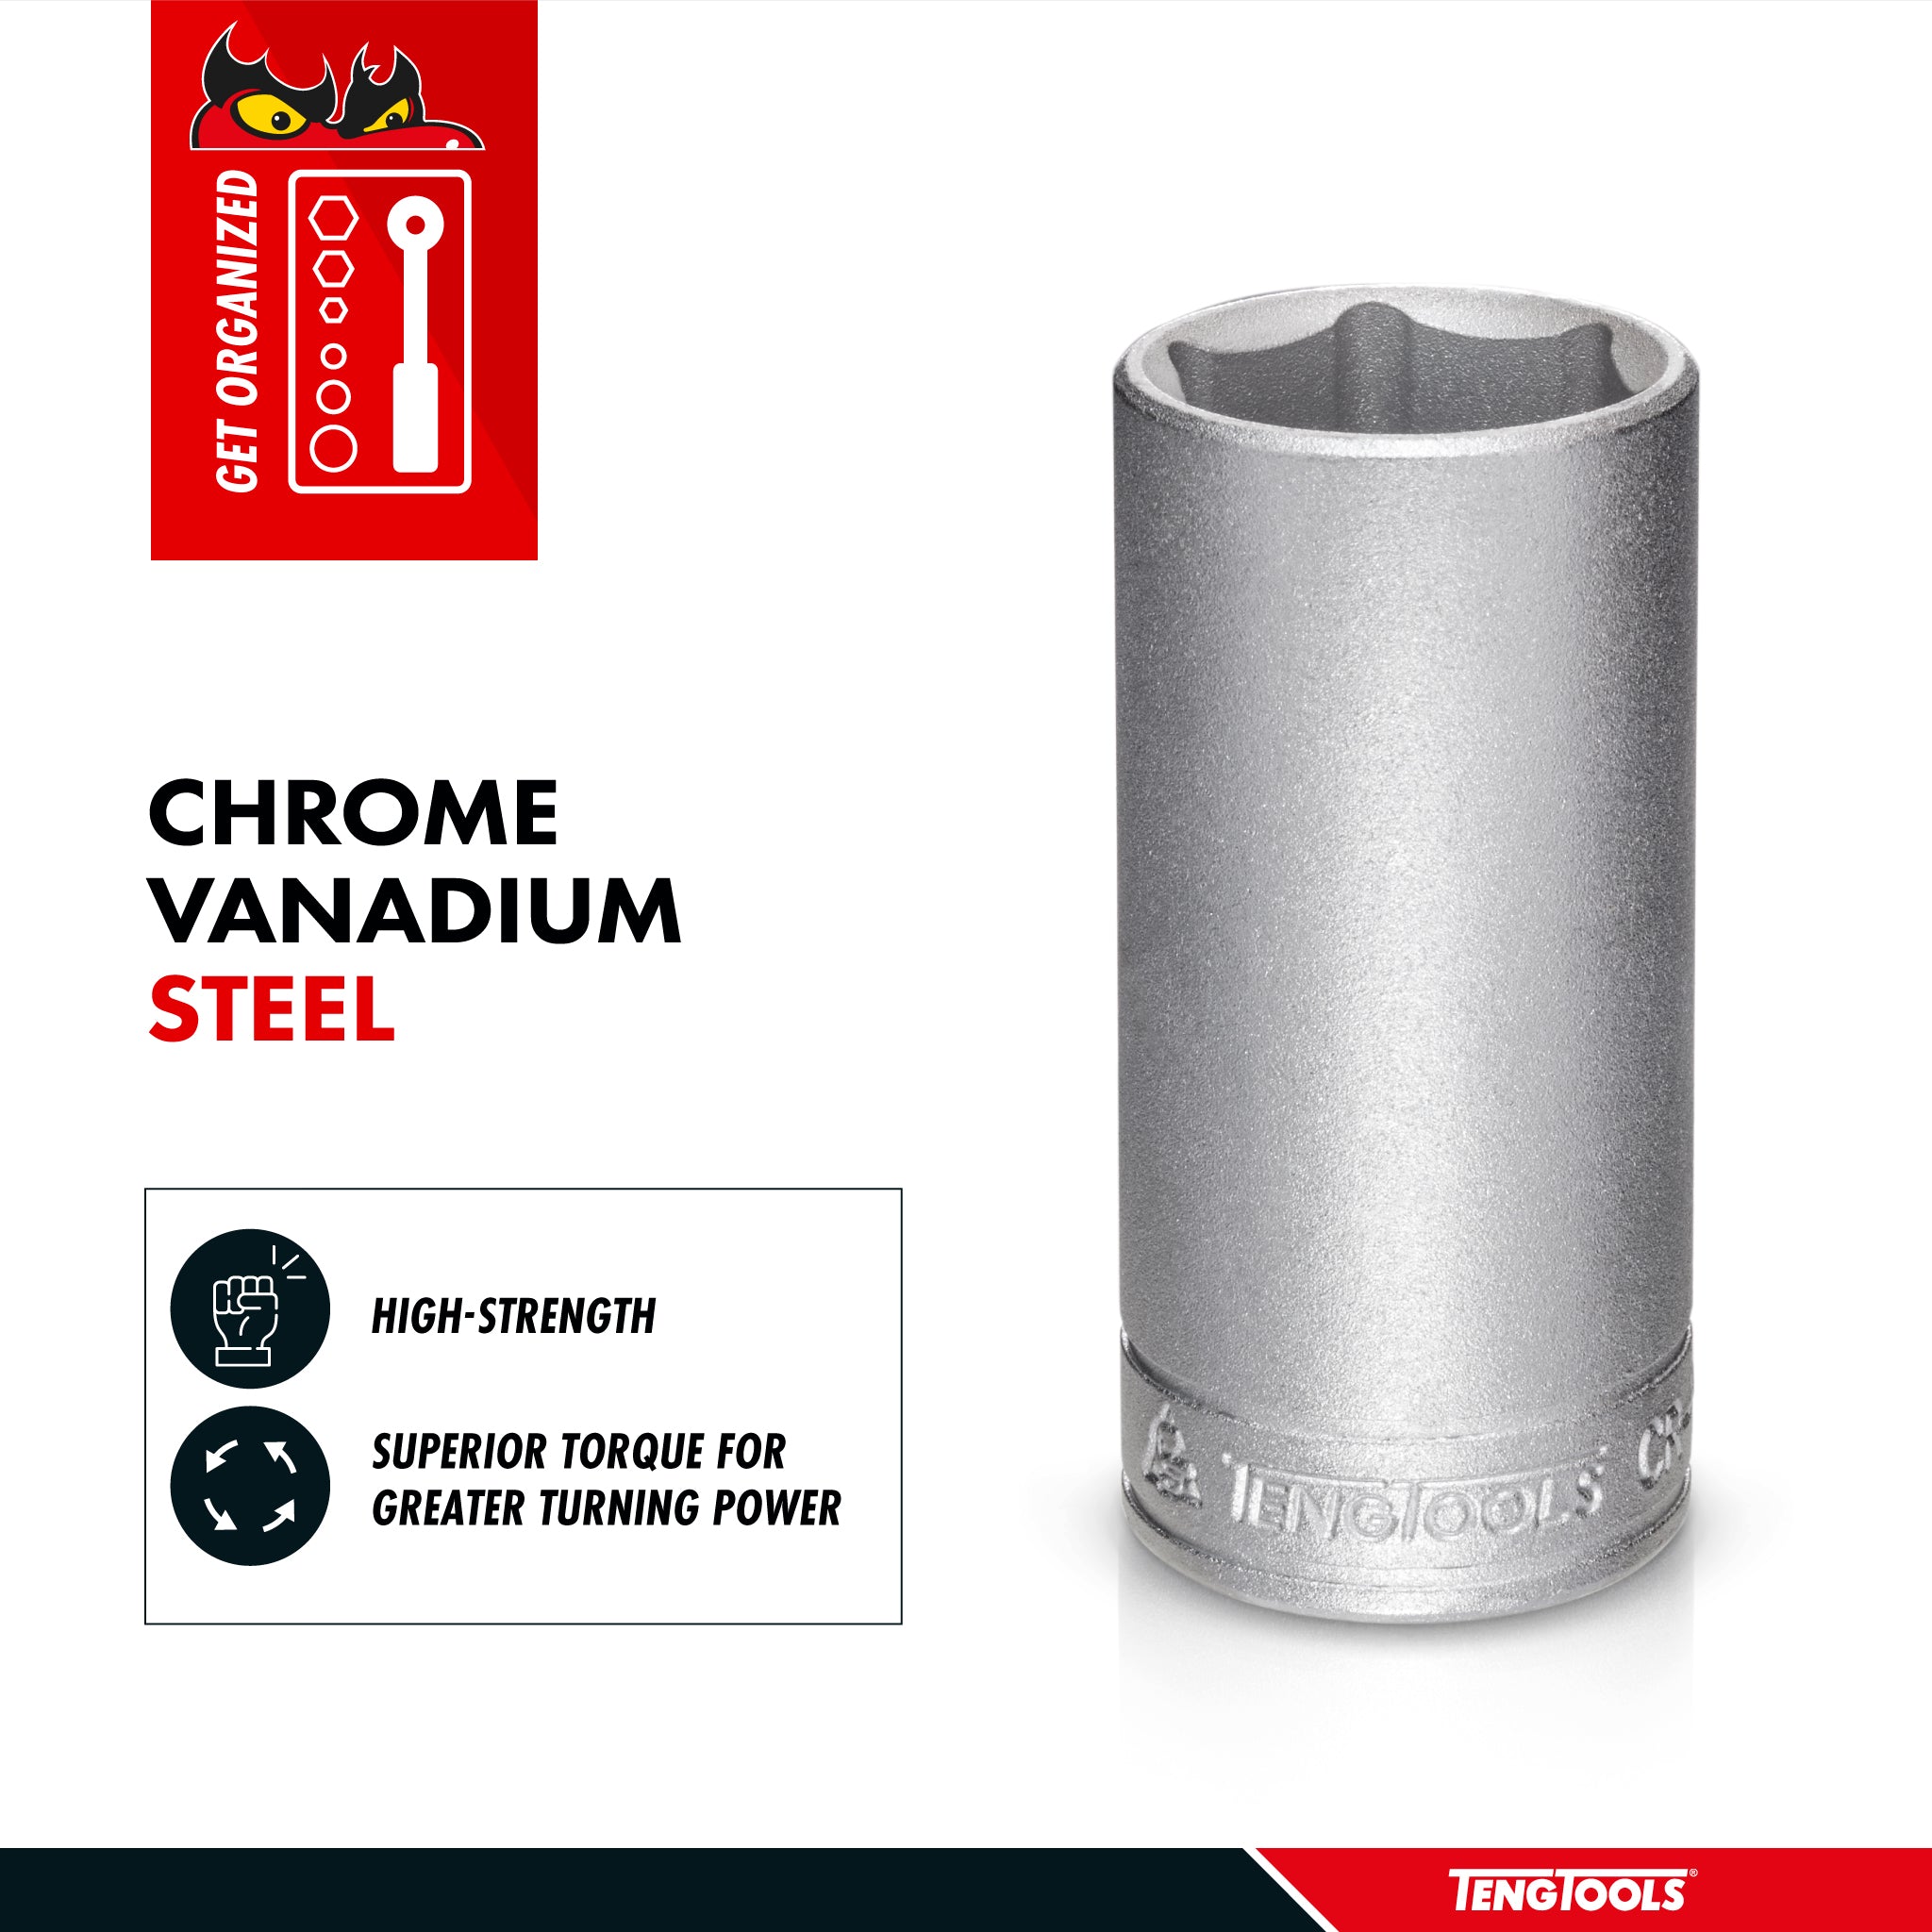 Teng Tools 1/4 Inch Drive 6 Point Metric Deep Chrome Vanadium Sockets - 11mm